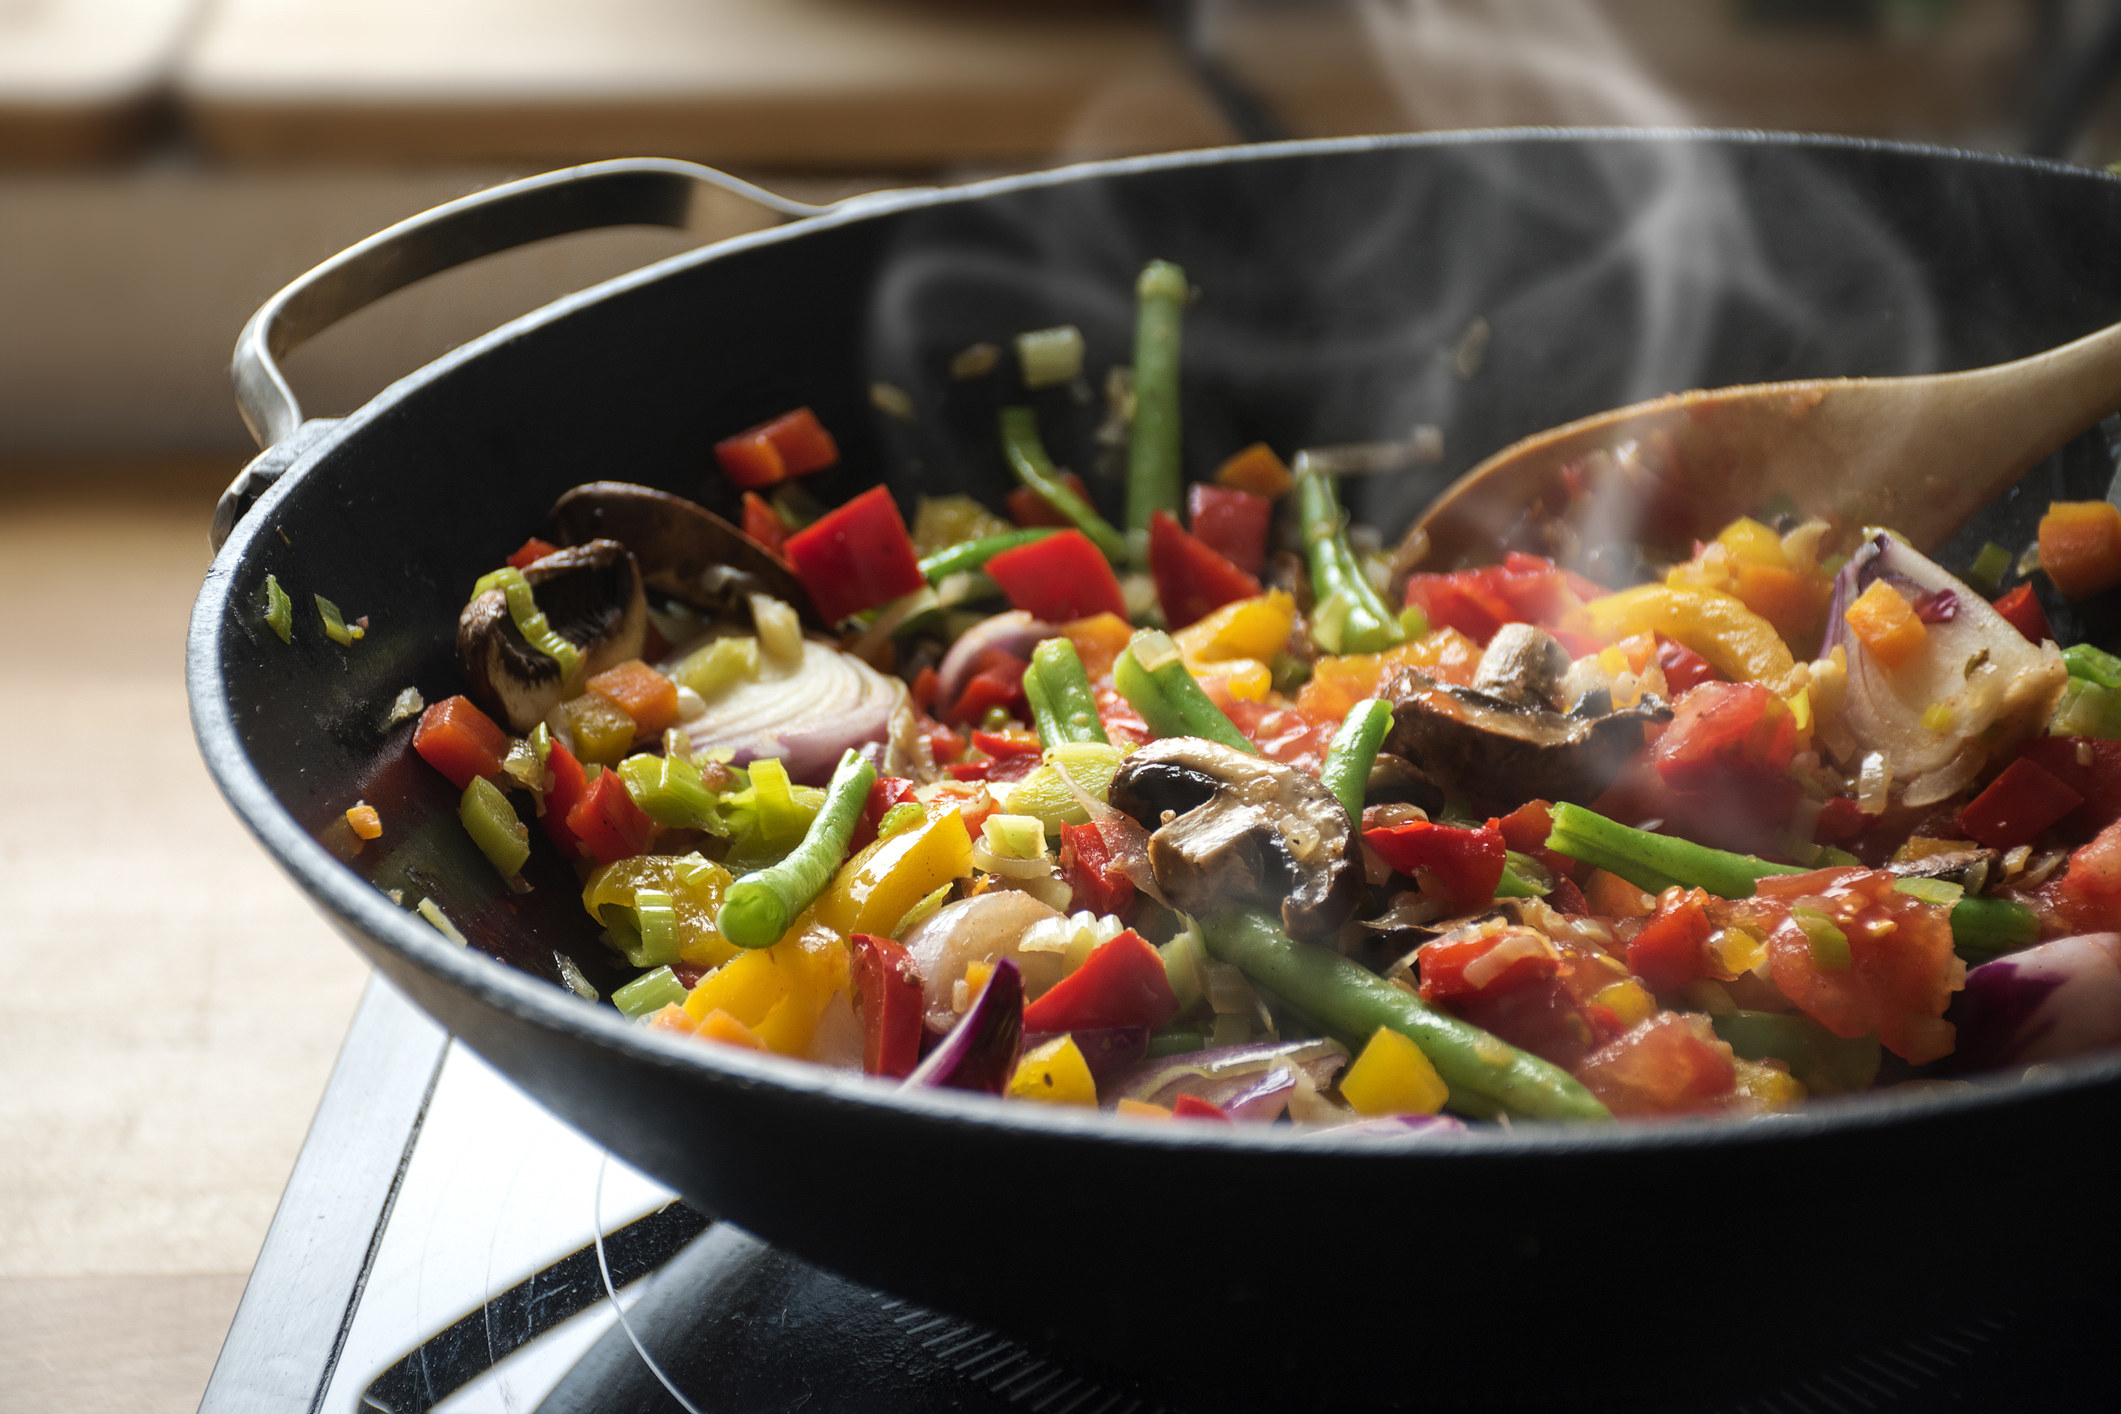 Making stir fry vegetables in a wok.